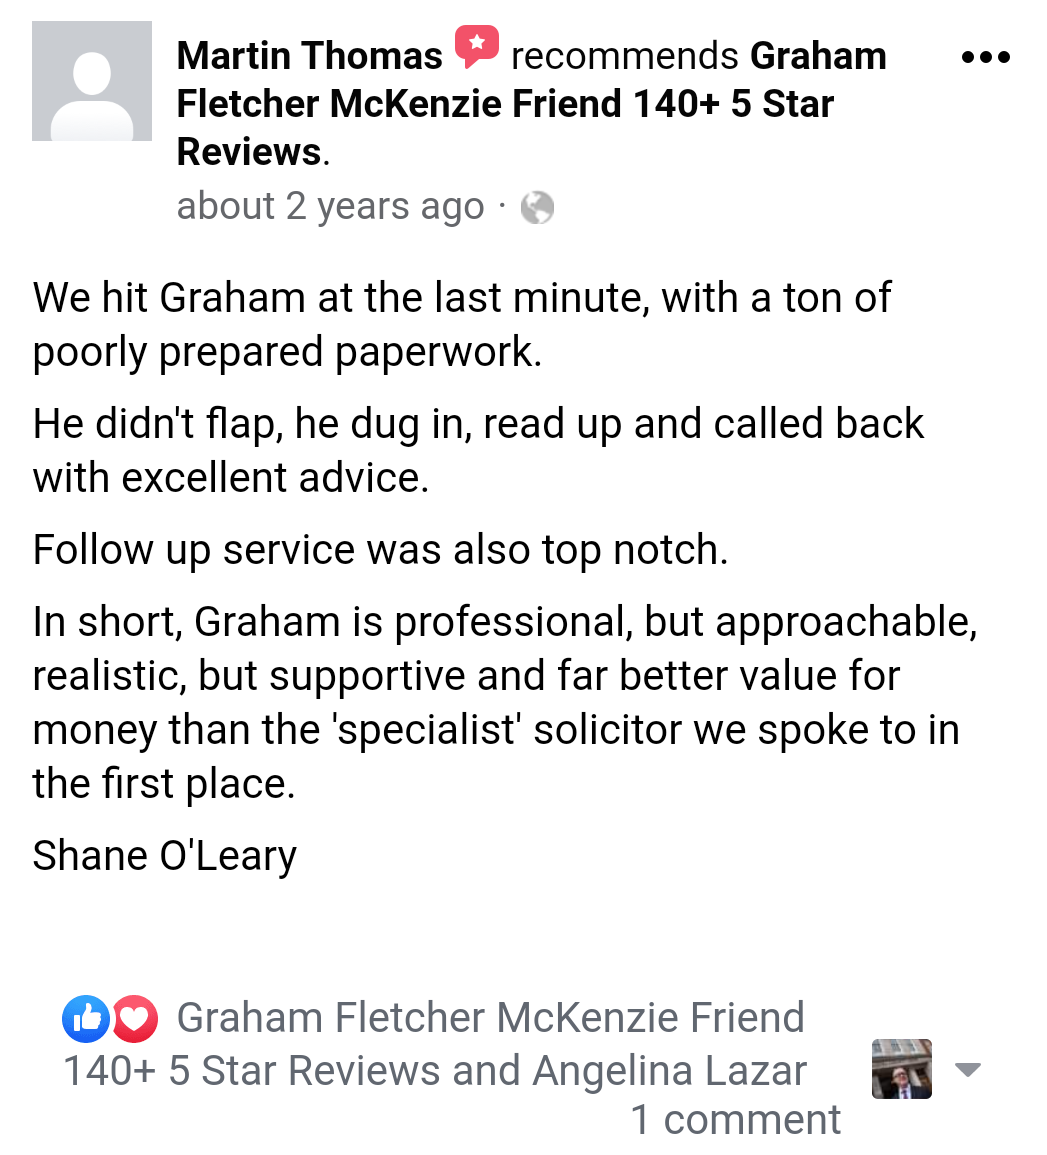 5 star facebook mckenzie friend review from mr martin thomas